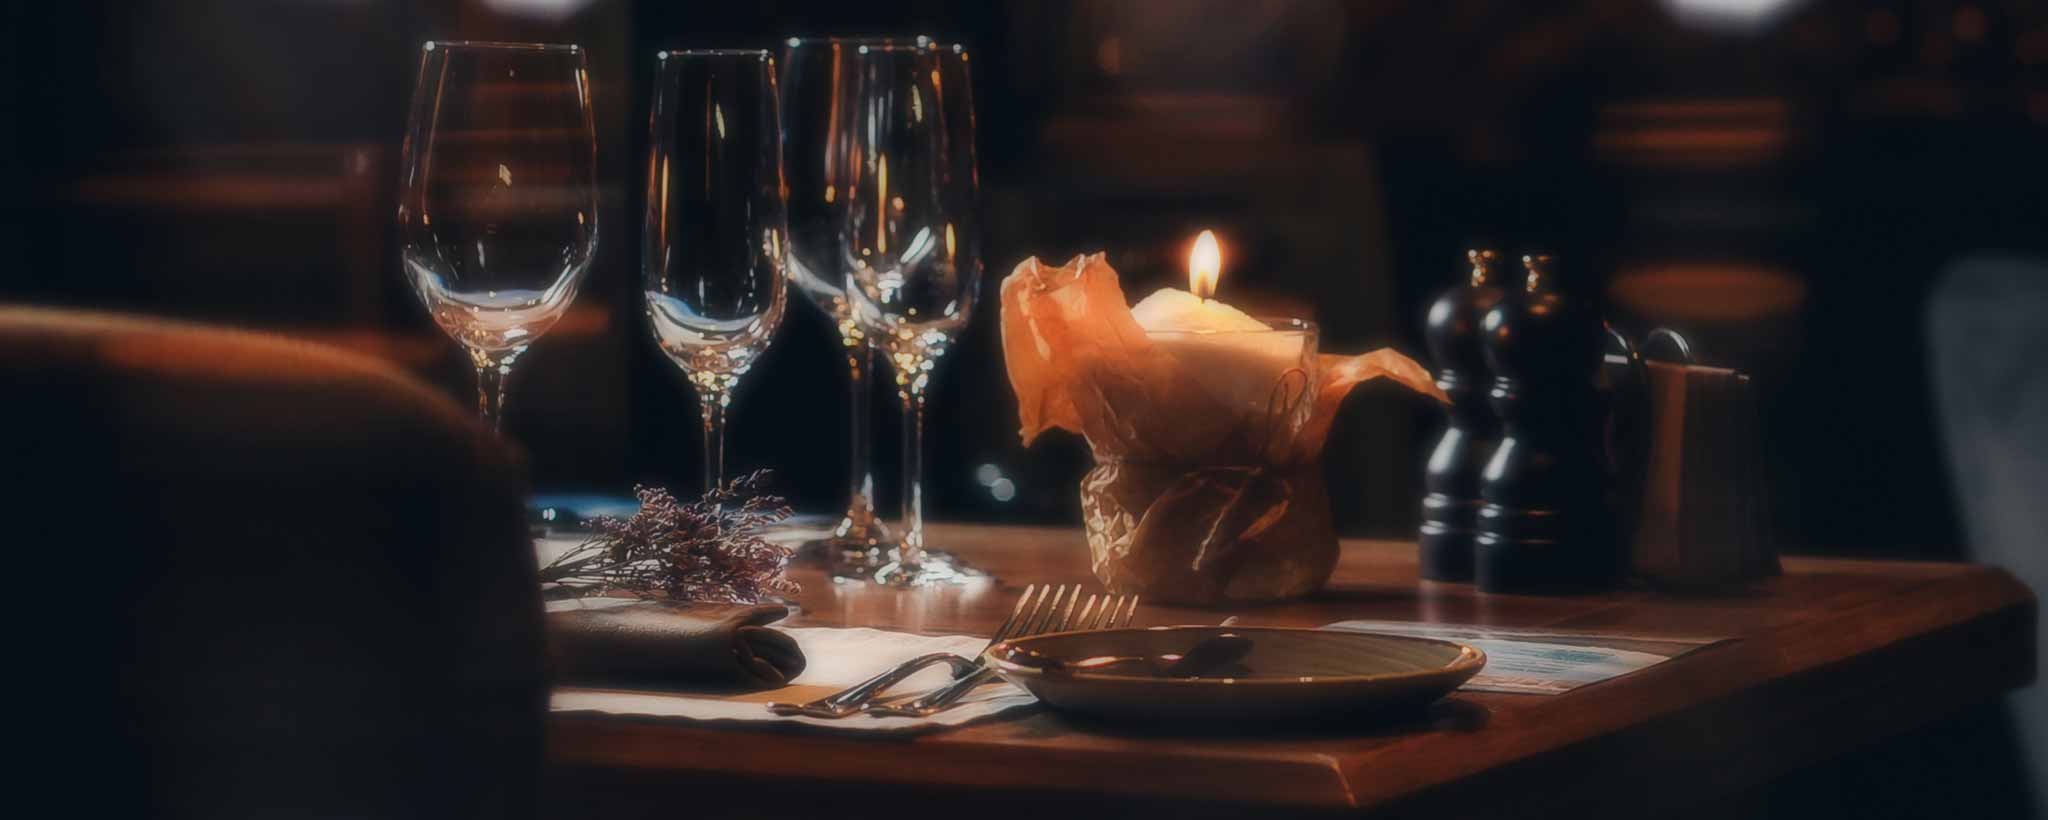 'Romantic dinner table'